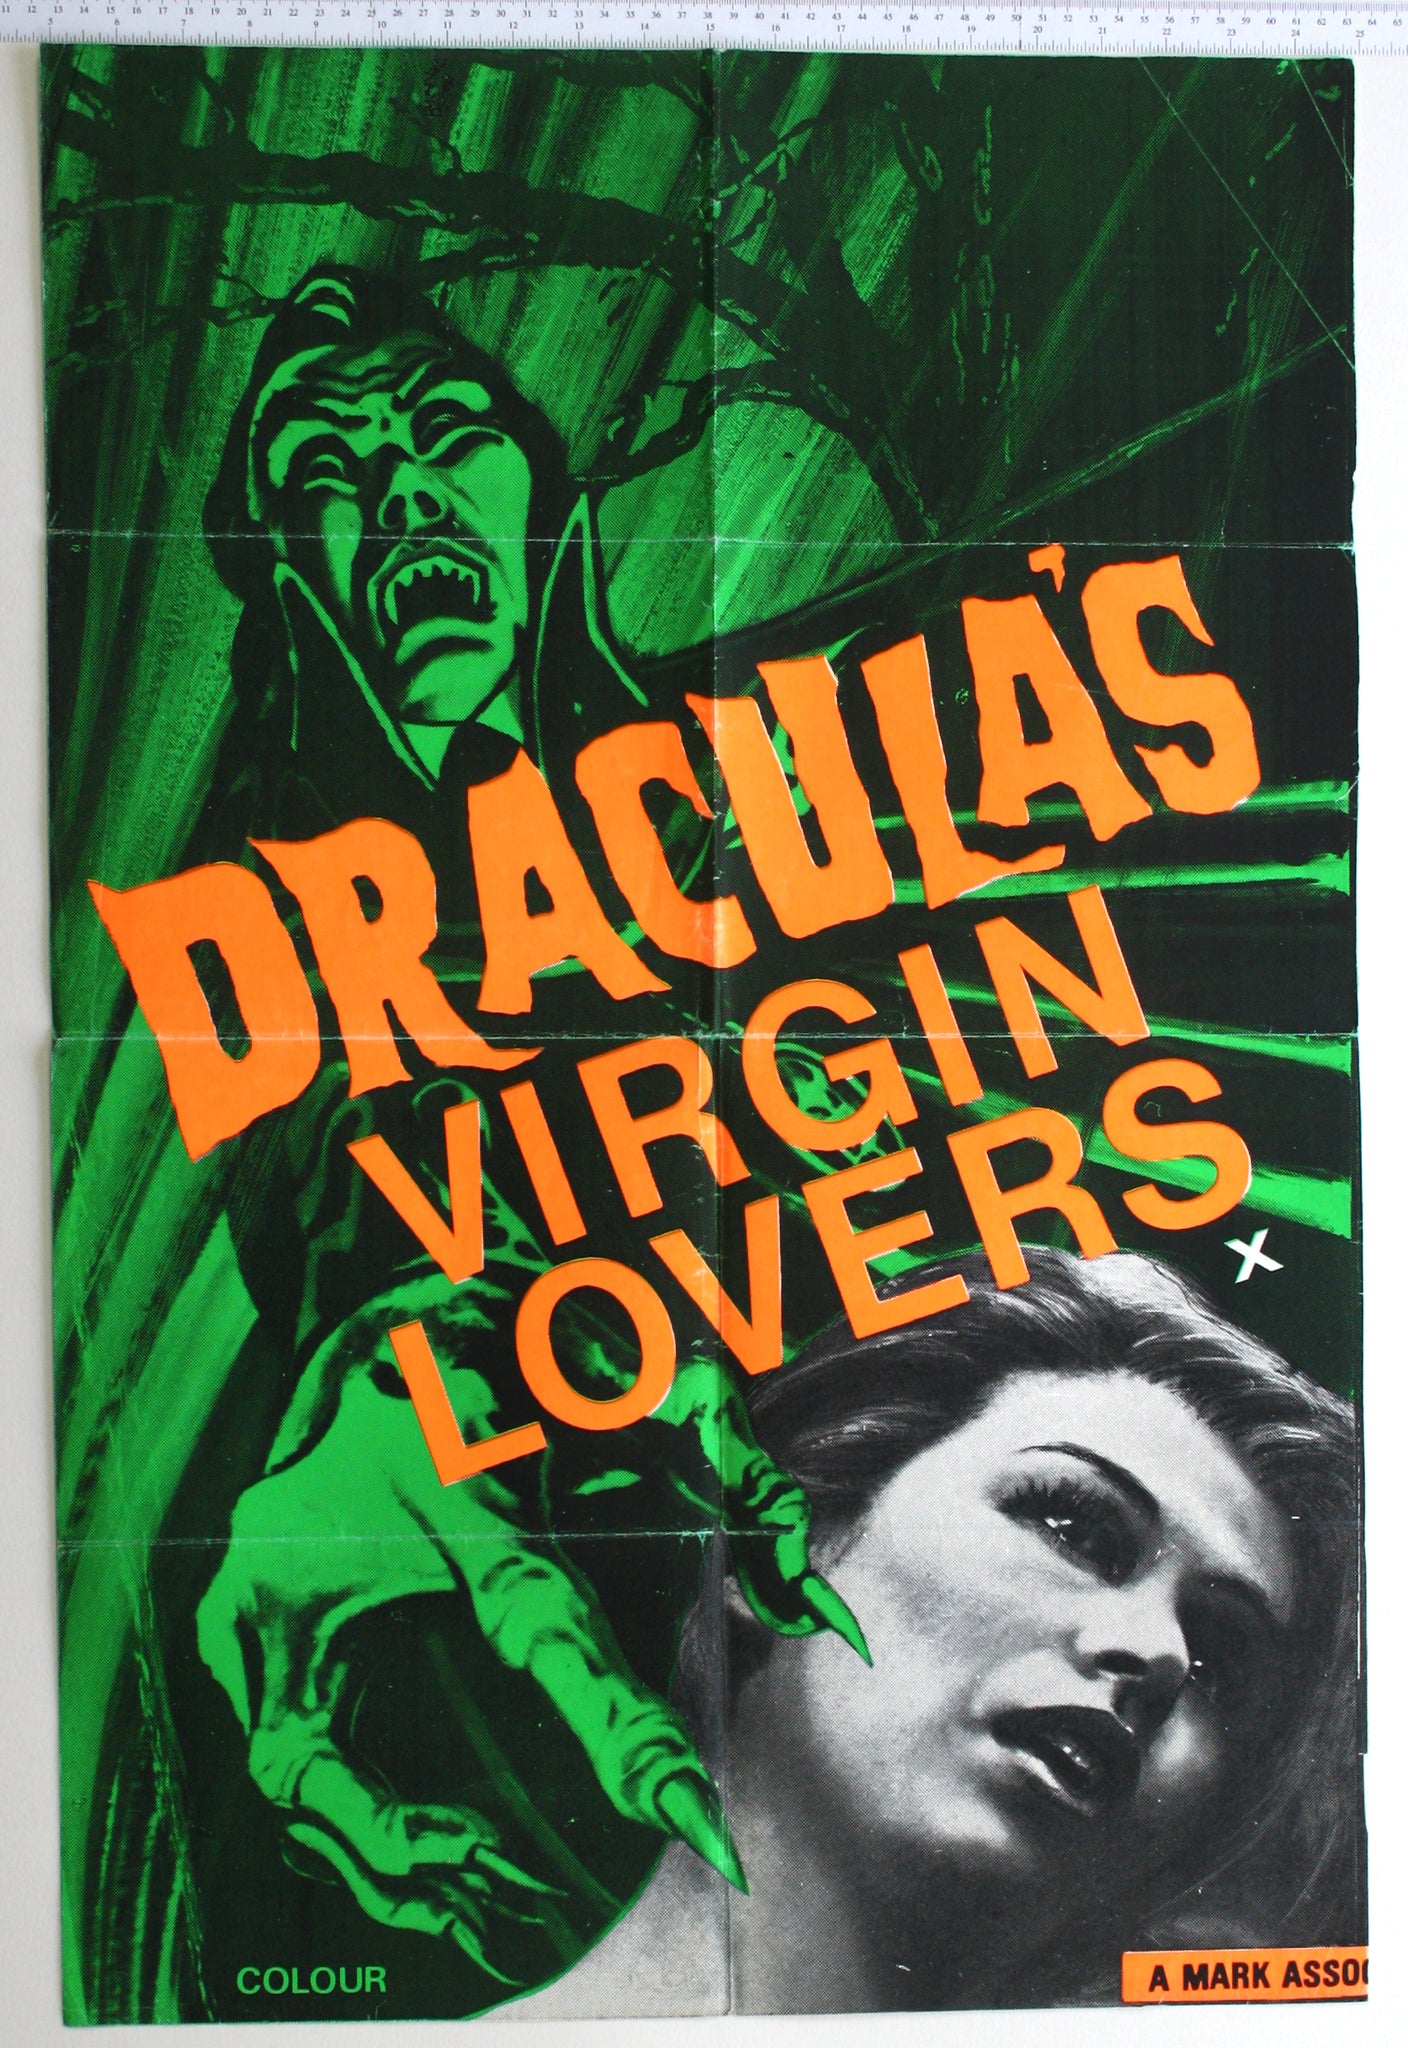 Green / black artwork of vampiren clawed hand reaching for b+w photo of female victim.